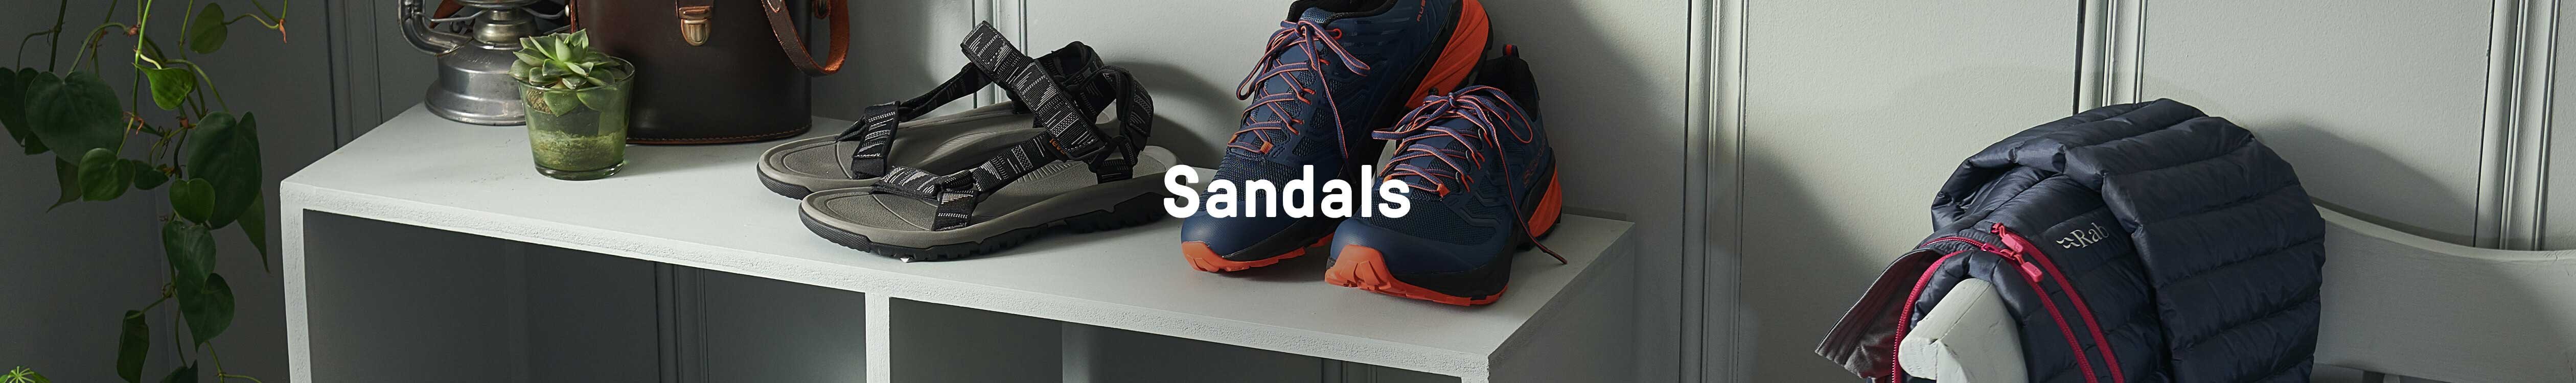 Walking sandals for women